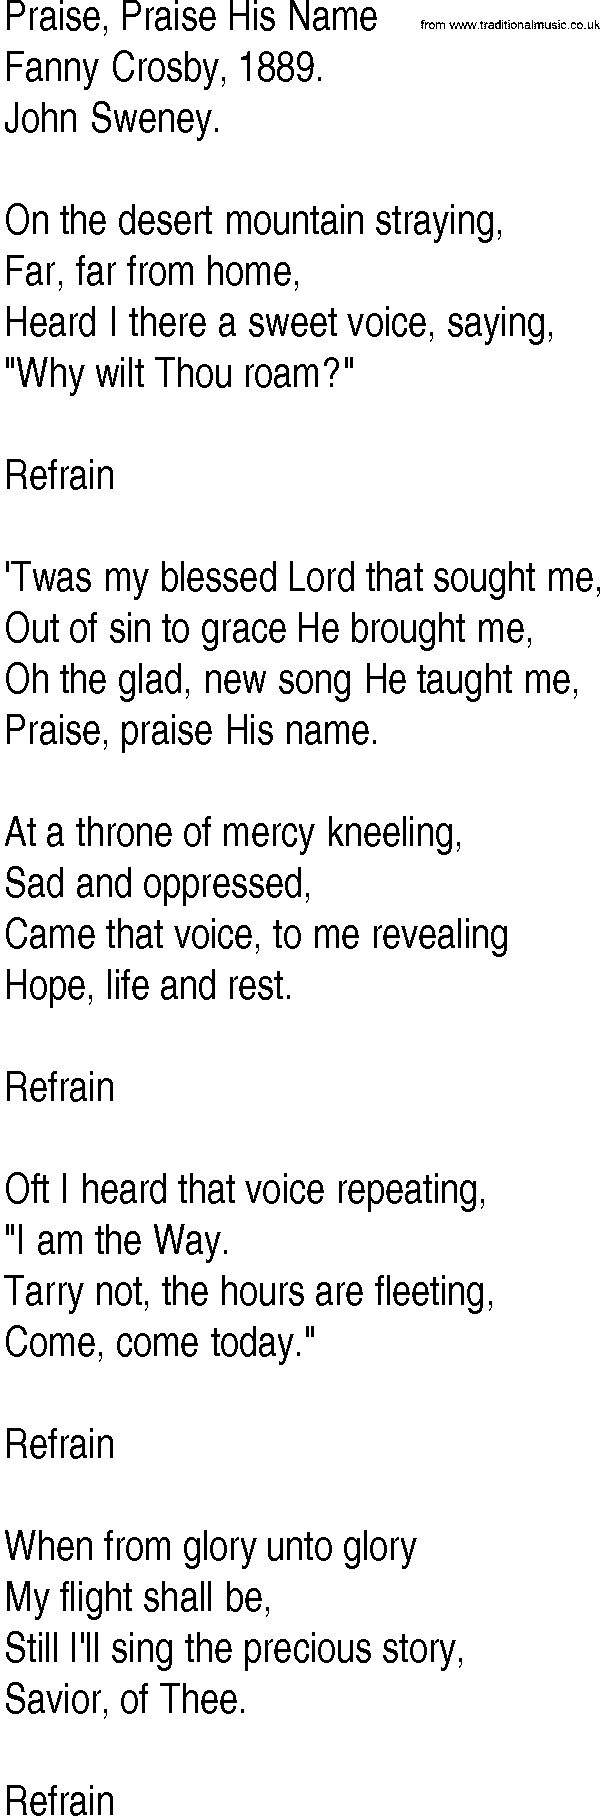 Hymn and Gospel Song: Praise, Praise His Name by Fanny Crosby lyrics